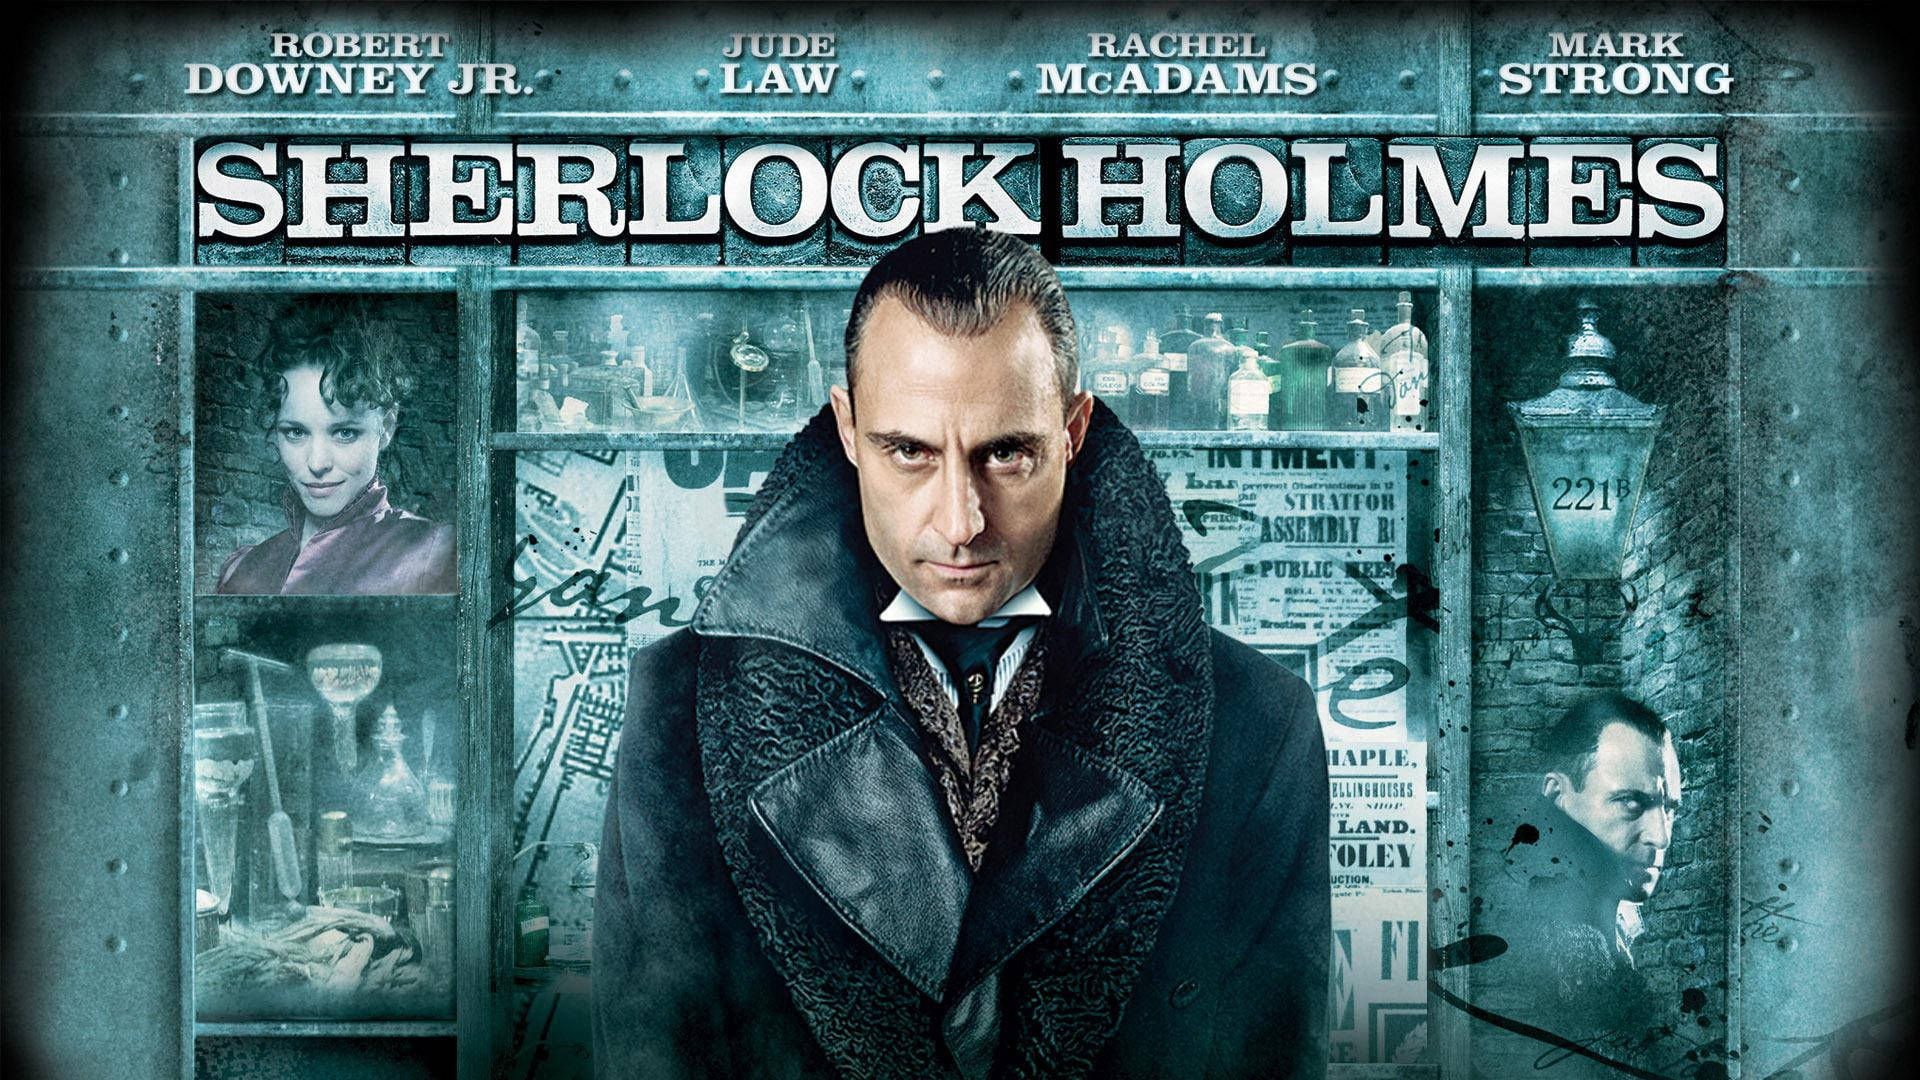 Sherlock Holmes Villain Poster Background